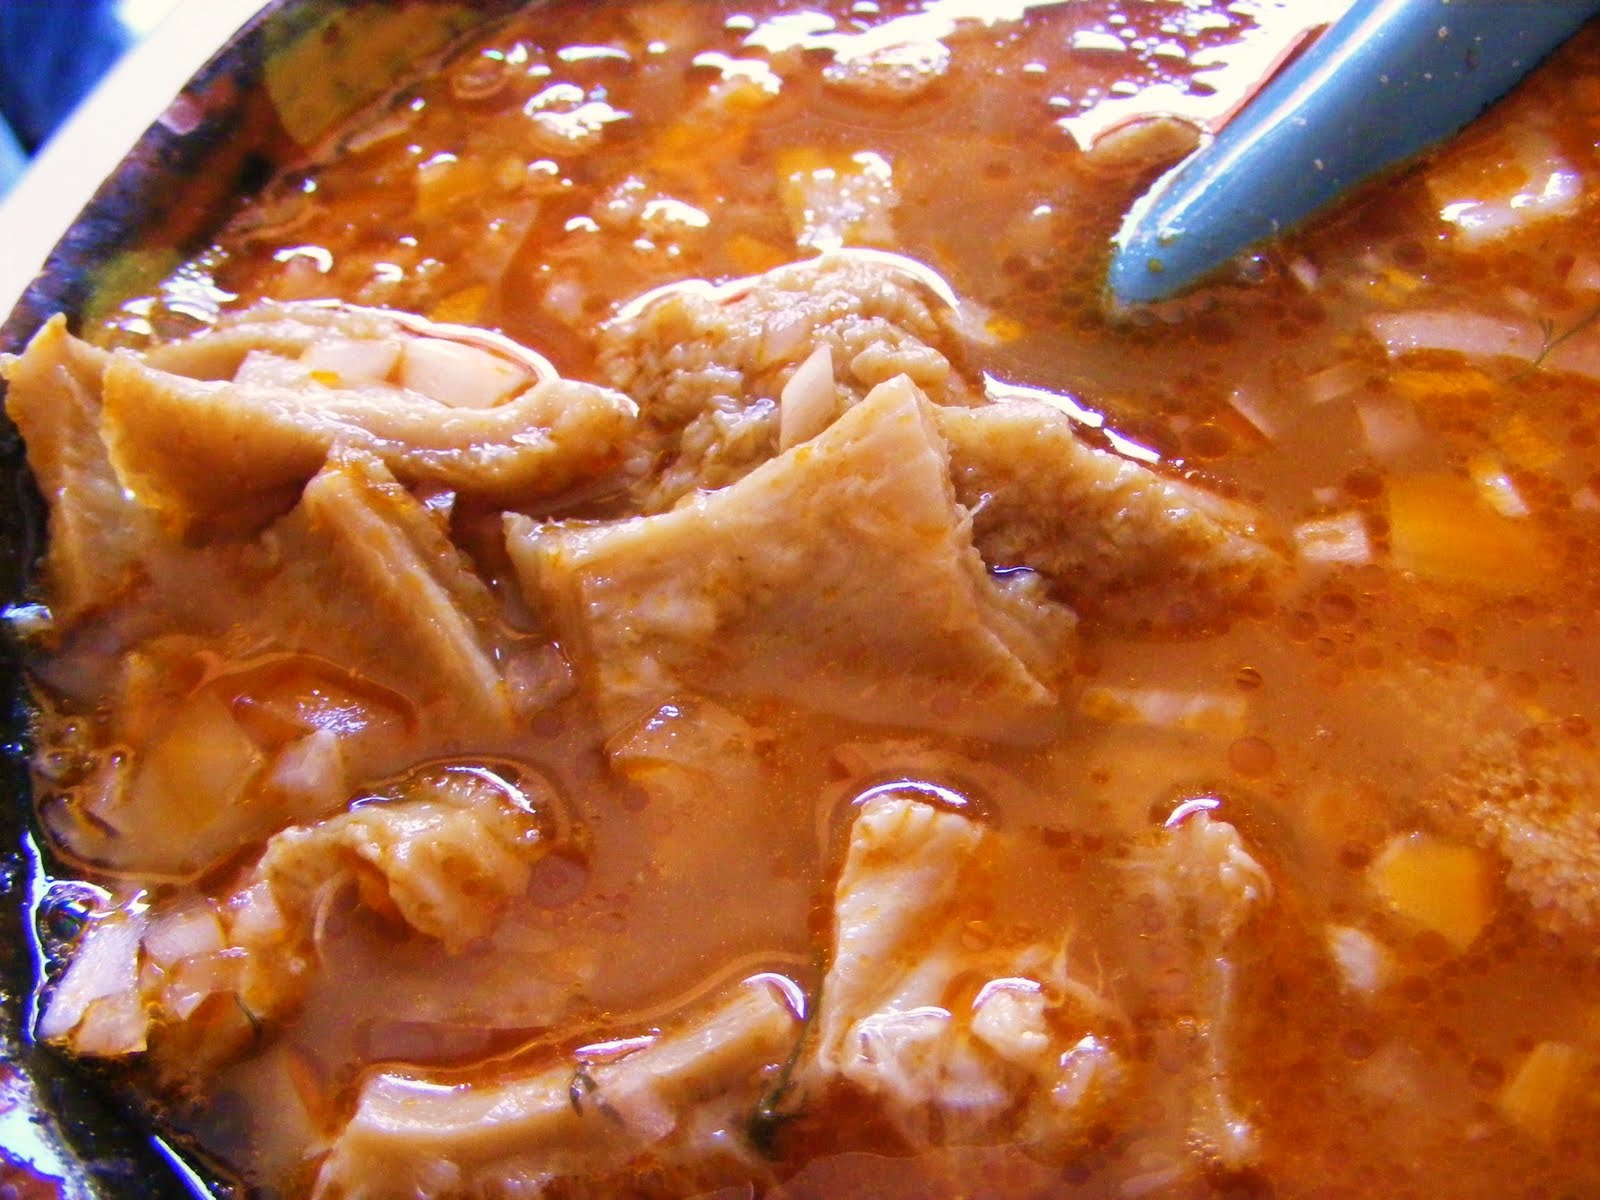 Mexican Menudo Soup